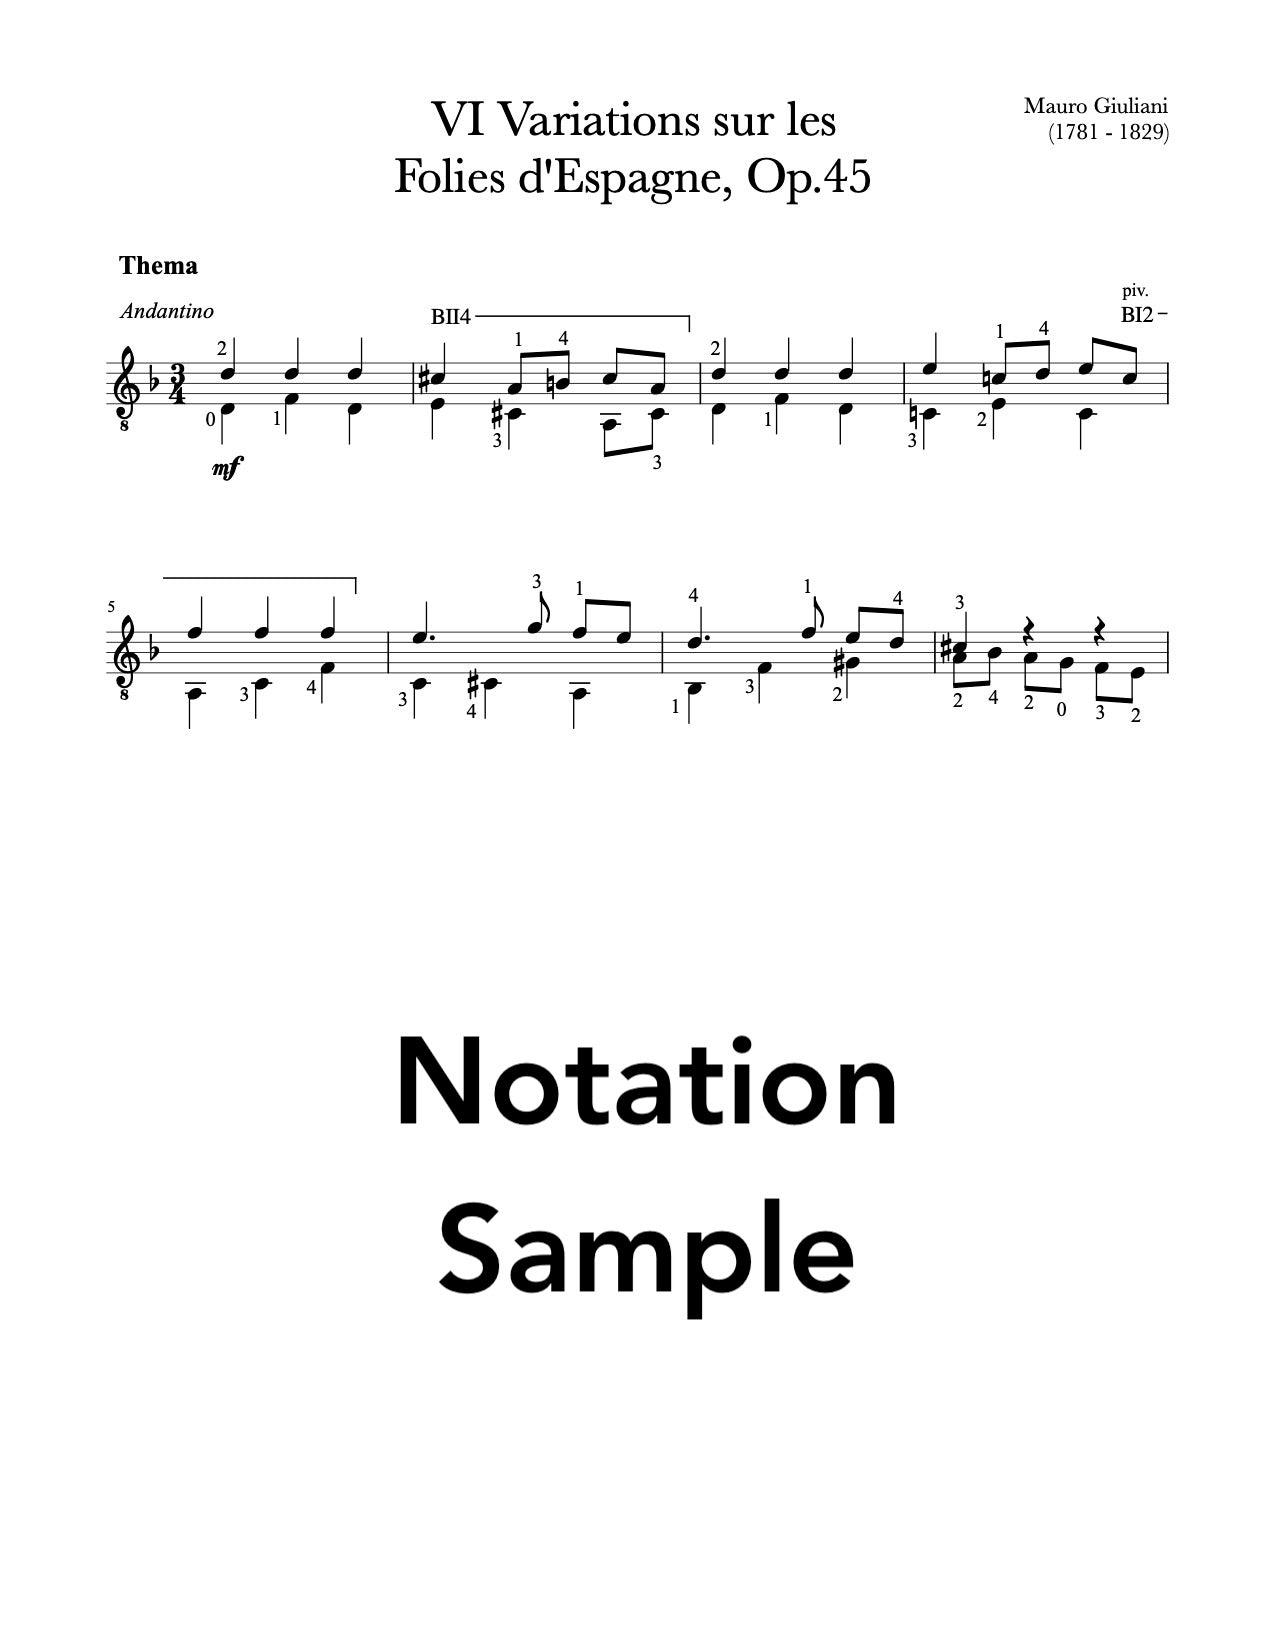 VI Variations sur les Folies d'Espagne, Op.45 by Giuliani for Guitar (Notation Sample)